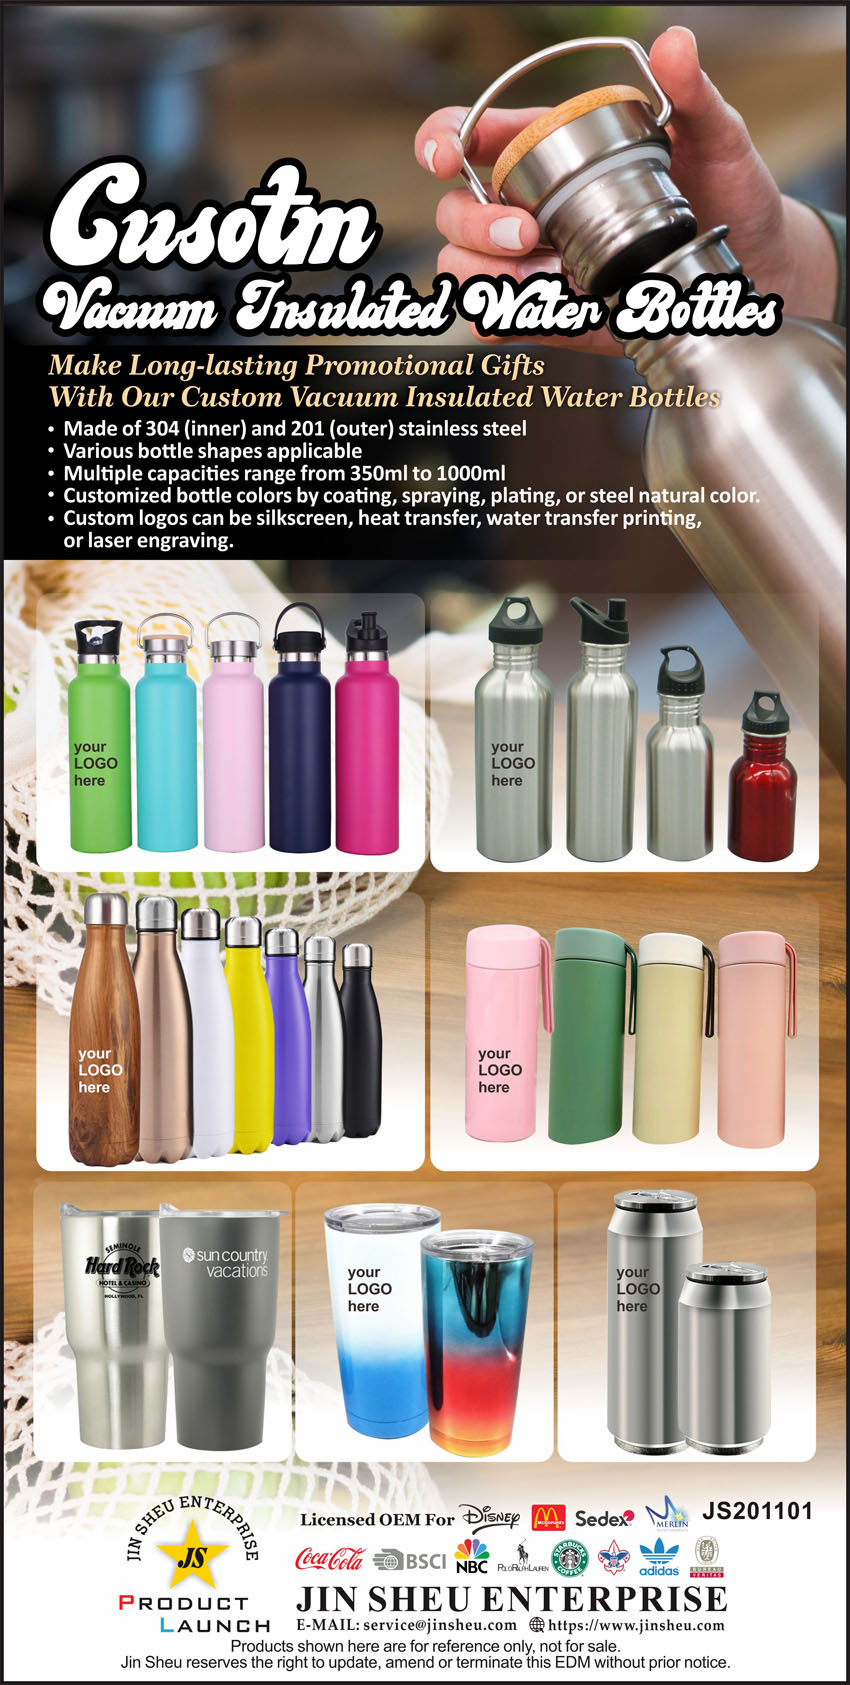 https://promotionalgift4u.com/wp-content/uploads/2020/11/custom-vacuum-insulated-water-bottles-.jpg